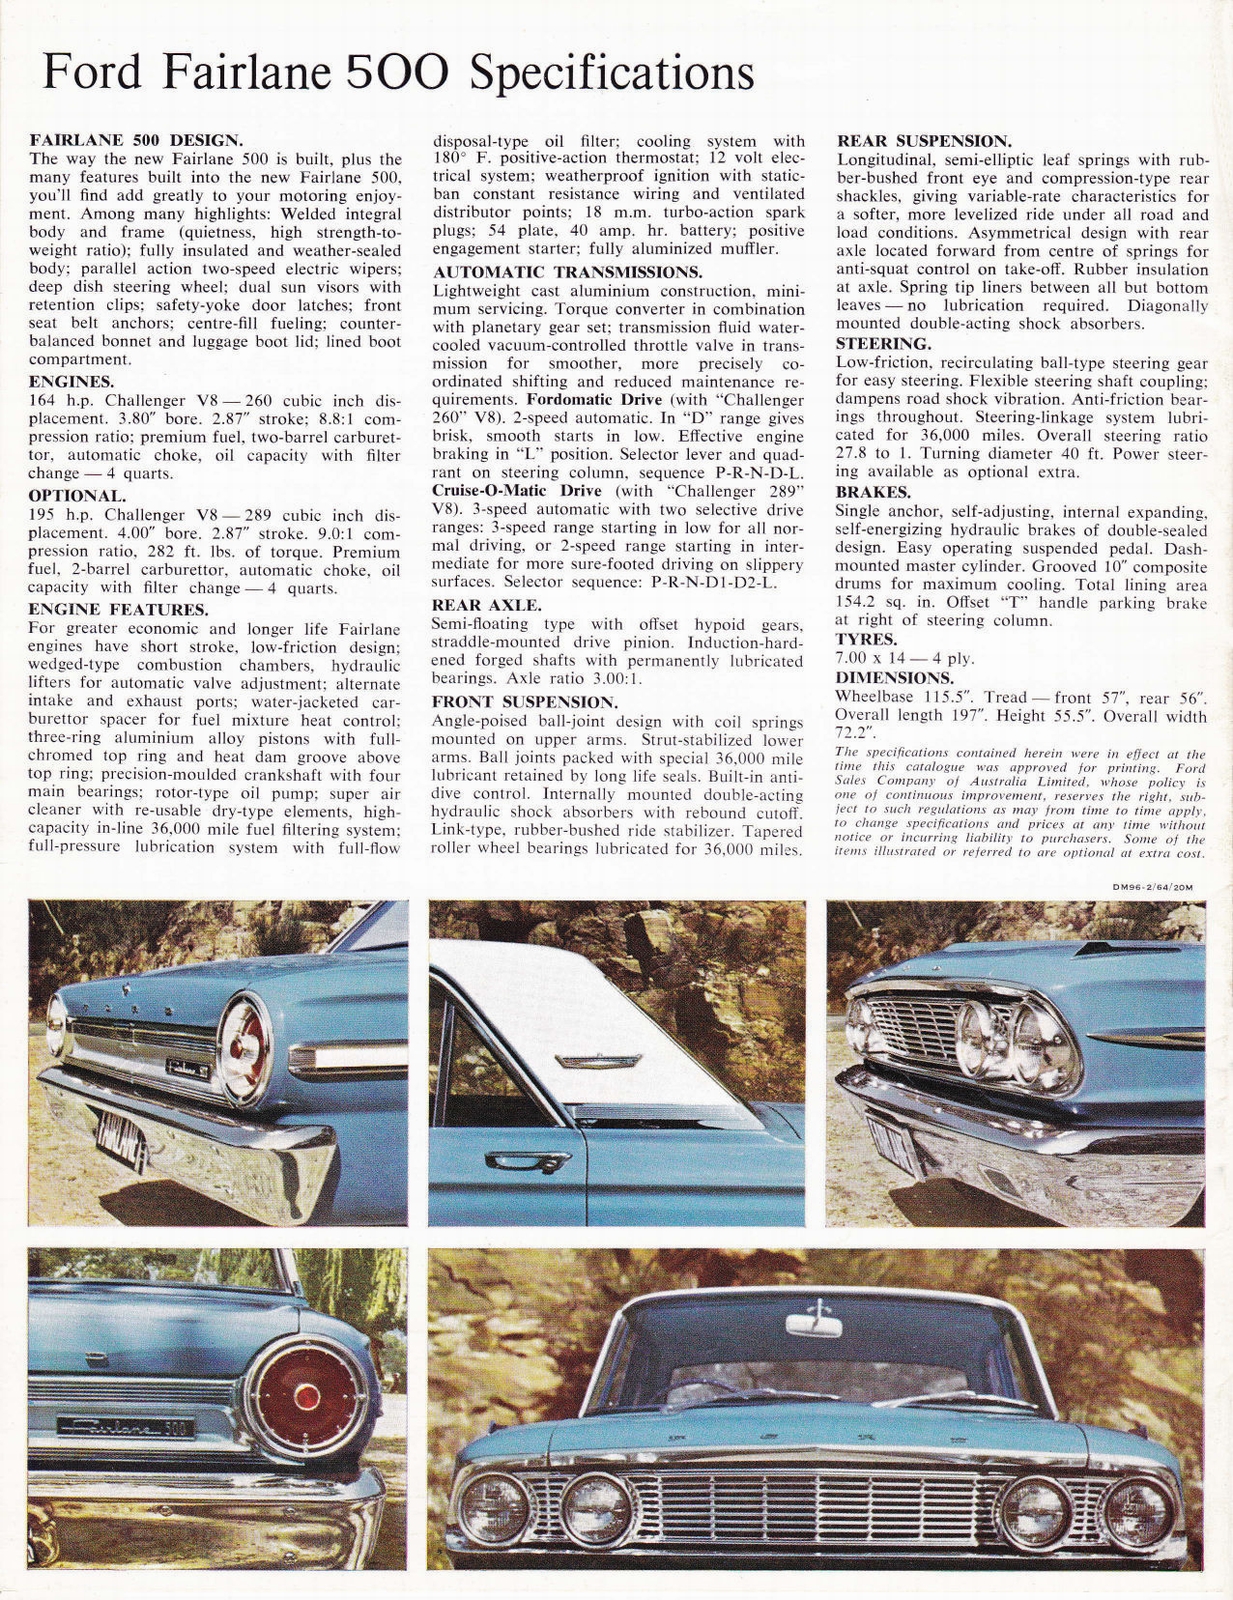 n_1964 Ford Fairlane 500-08.jpg